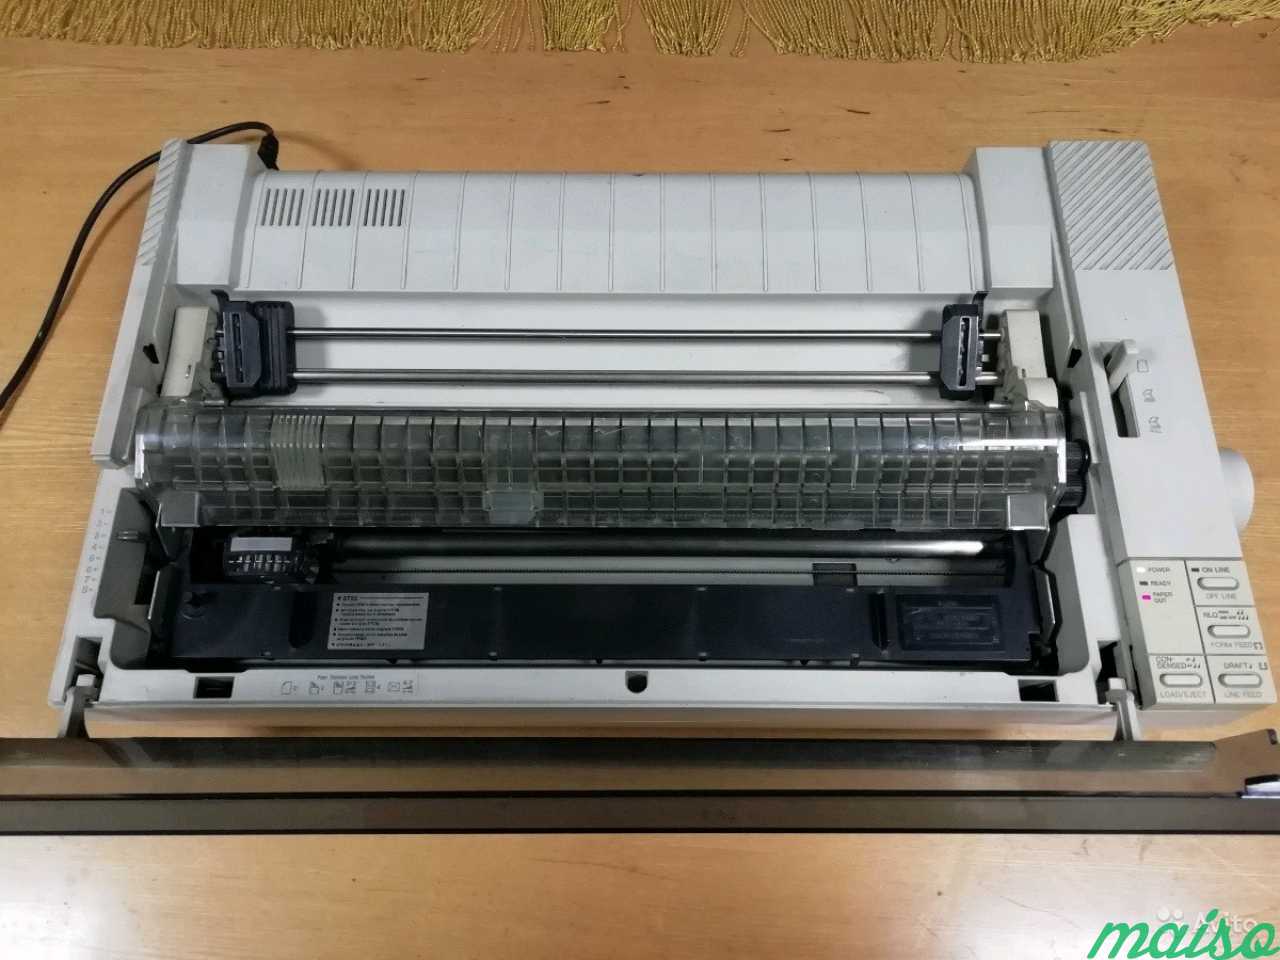 Матричный принтер epson lx. Принтер матричный Epson LX-1170. Матричный принтер Epson LX-1170 II. Принтер Epson LX 1050. Принтер матричный Epson LX-1050+.